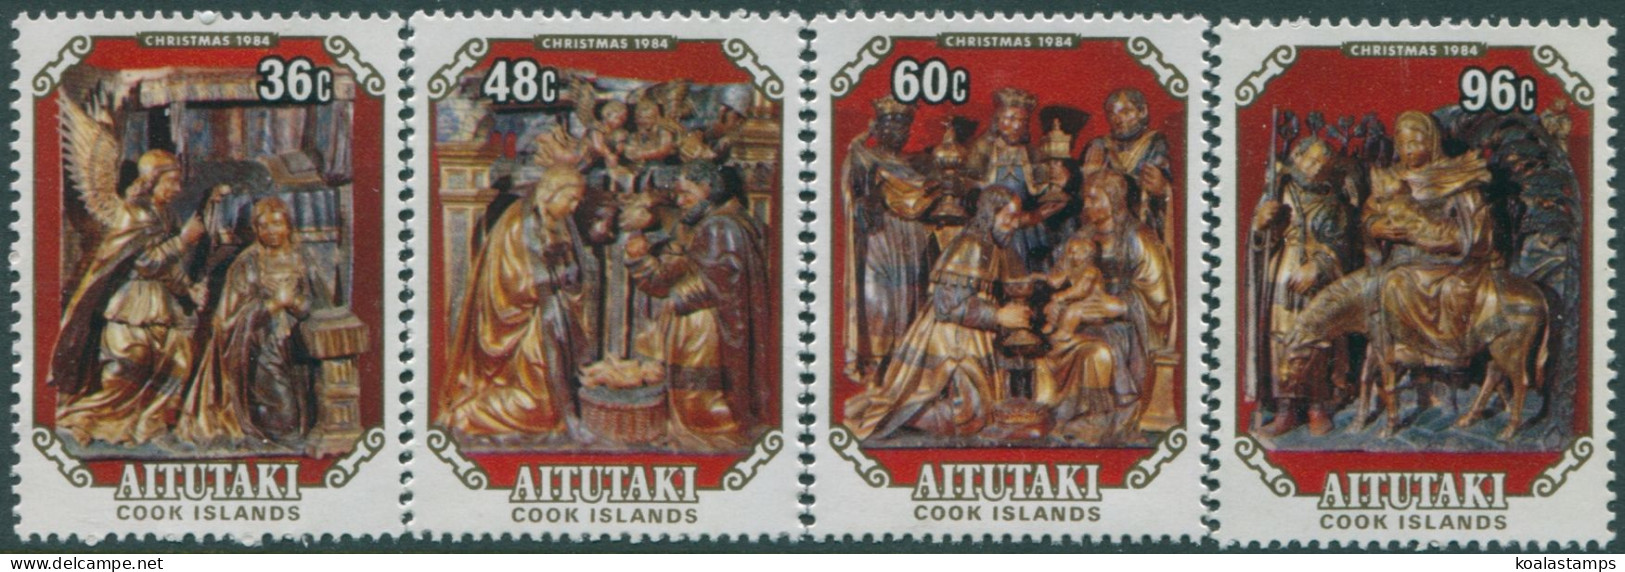 Aitutaki 1984 SG509-512 Christmas MNH - Cook Islands